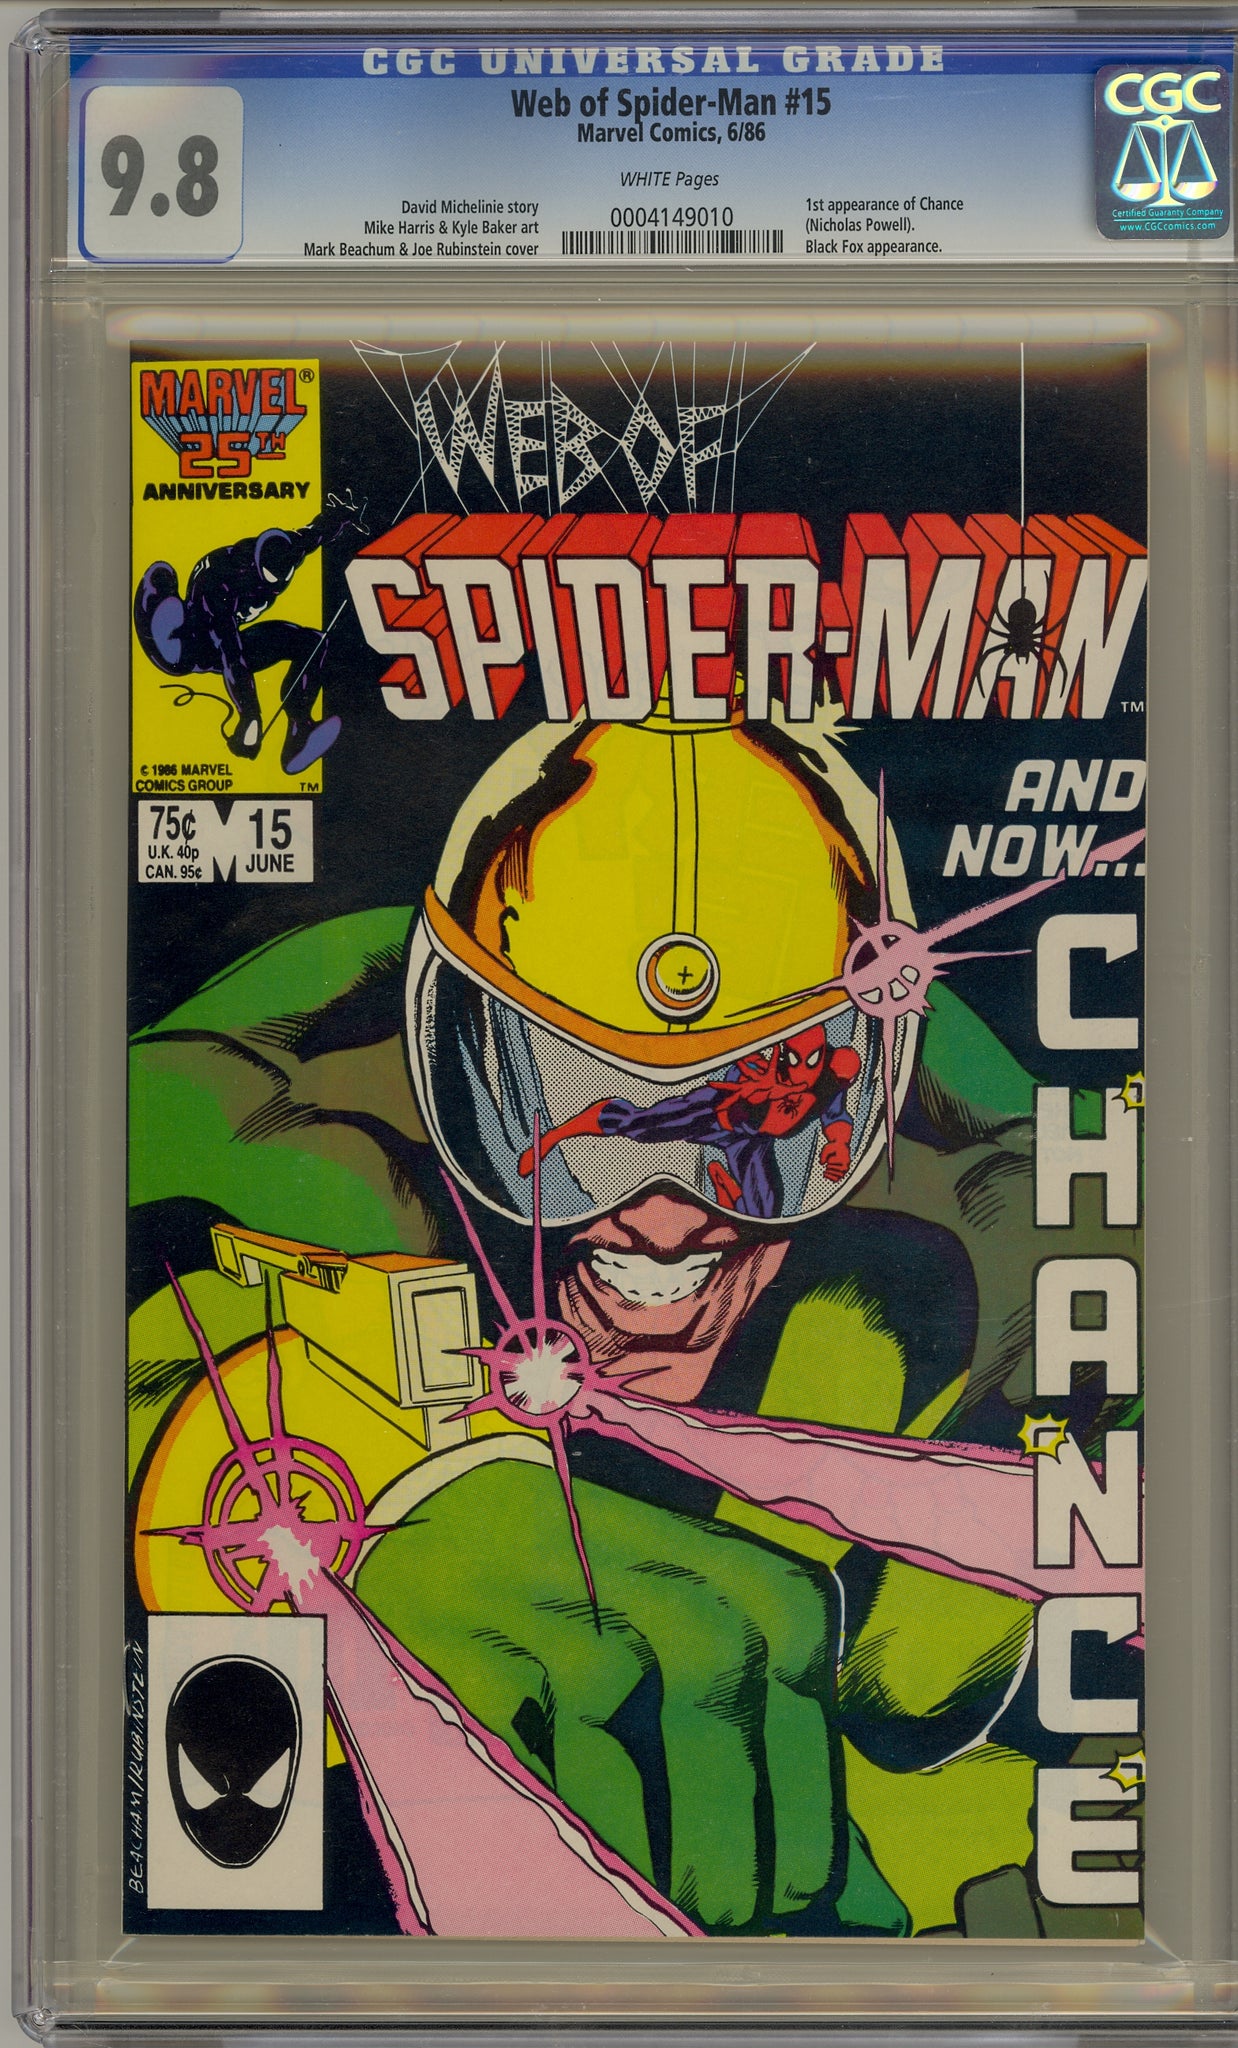 Web of Spider-Man #15 (1986) Chance